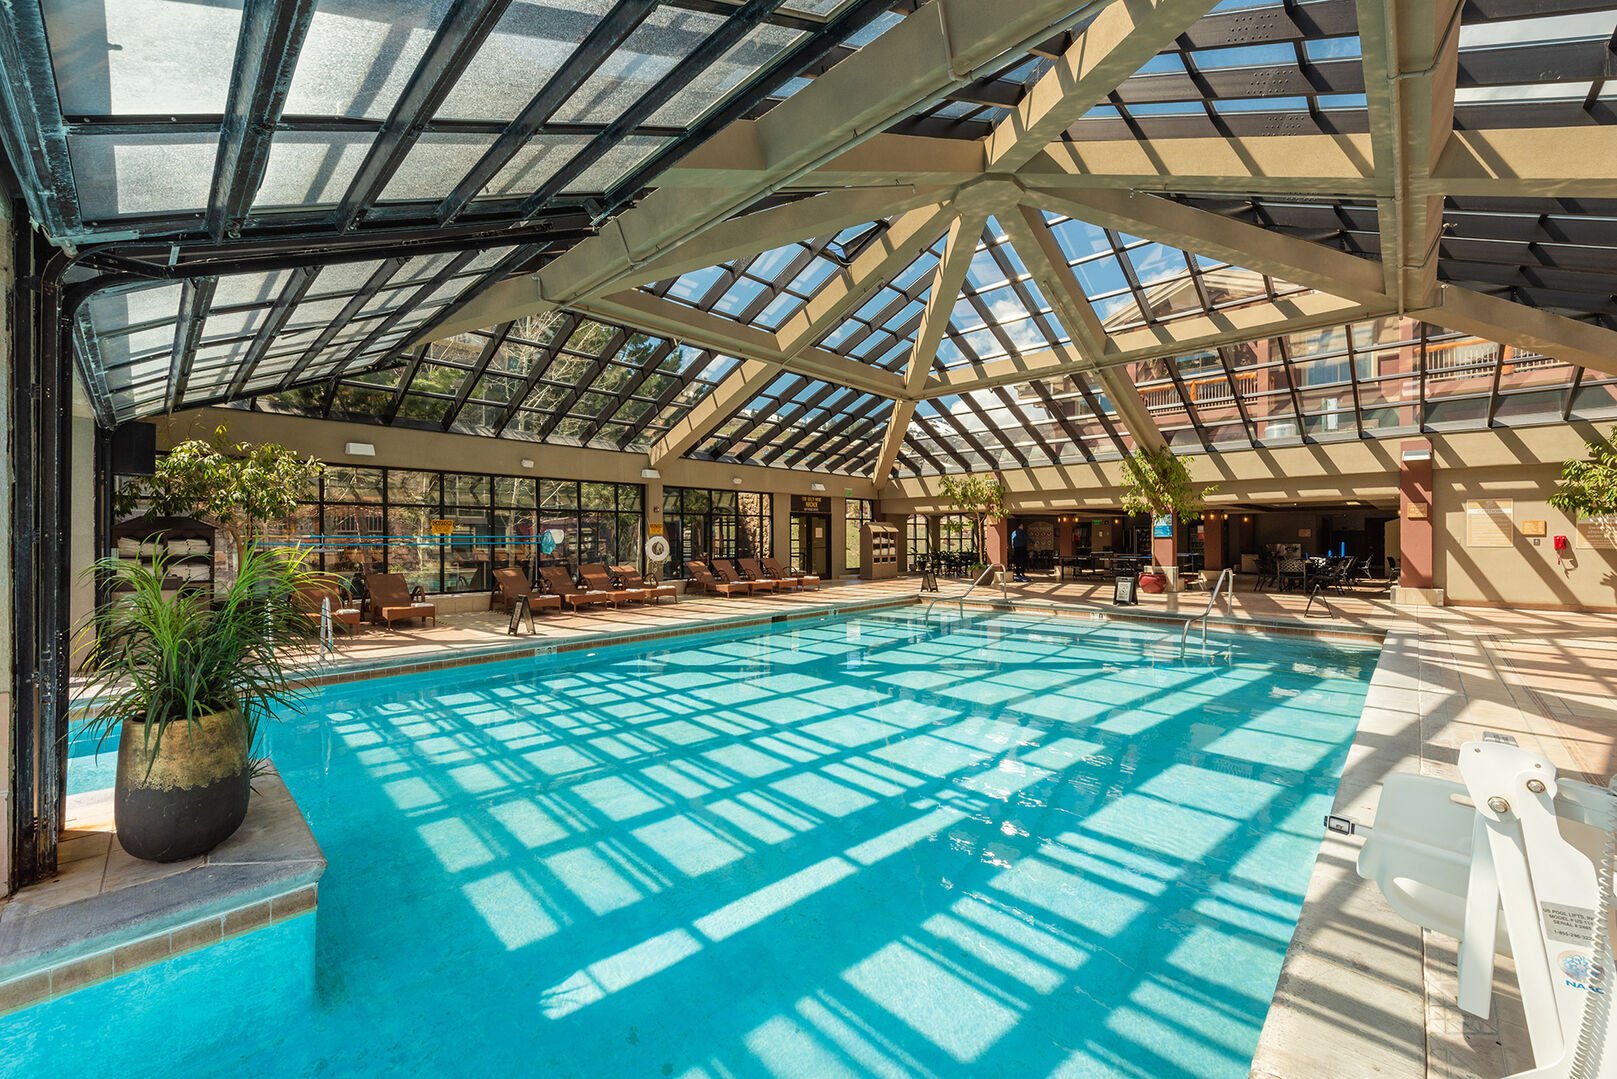 Main pool (heated indoor/outdoor)